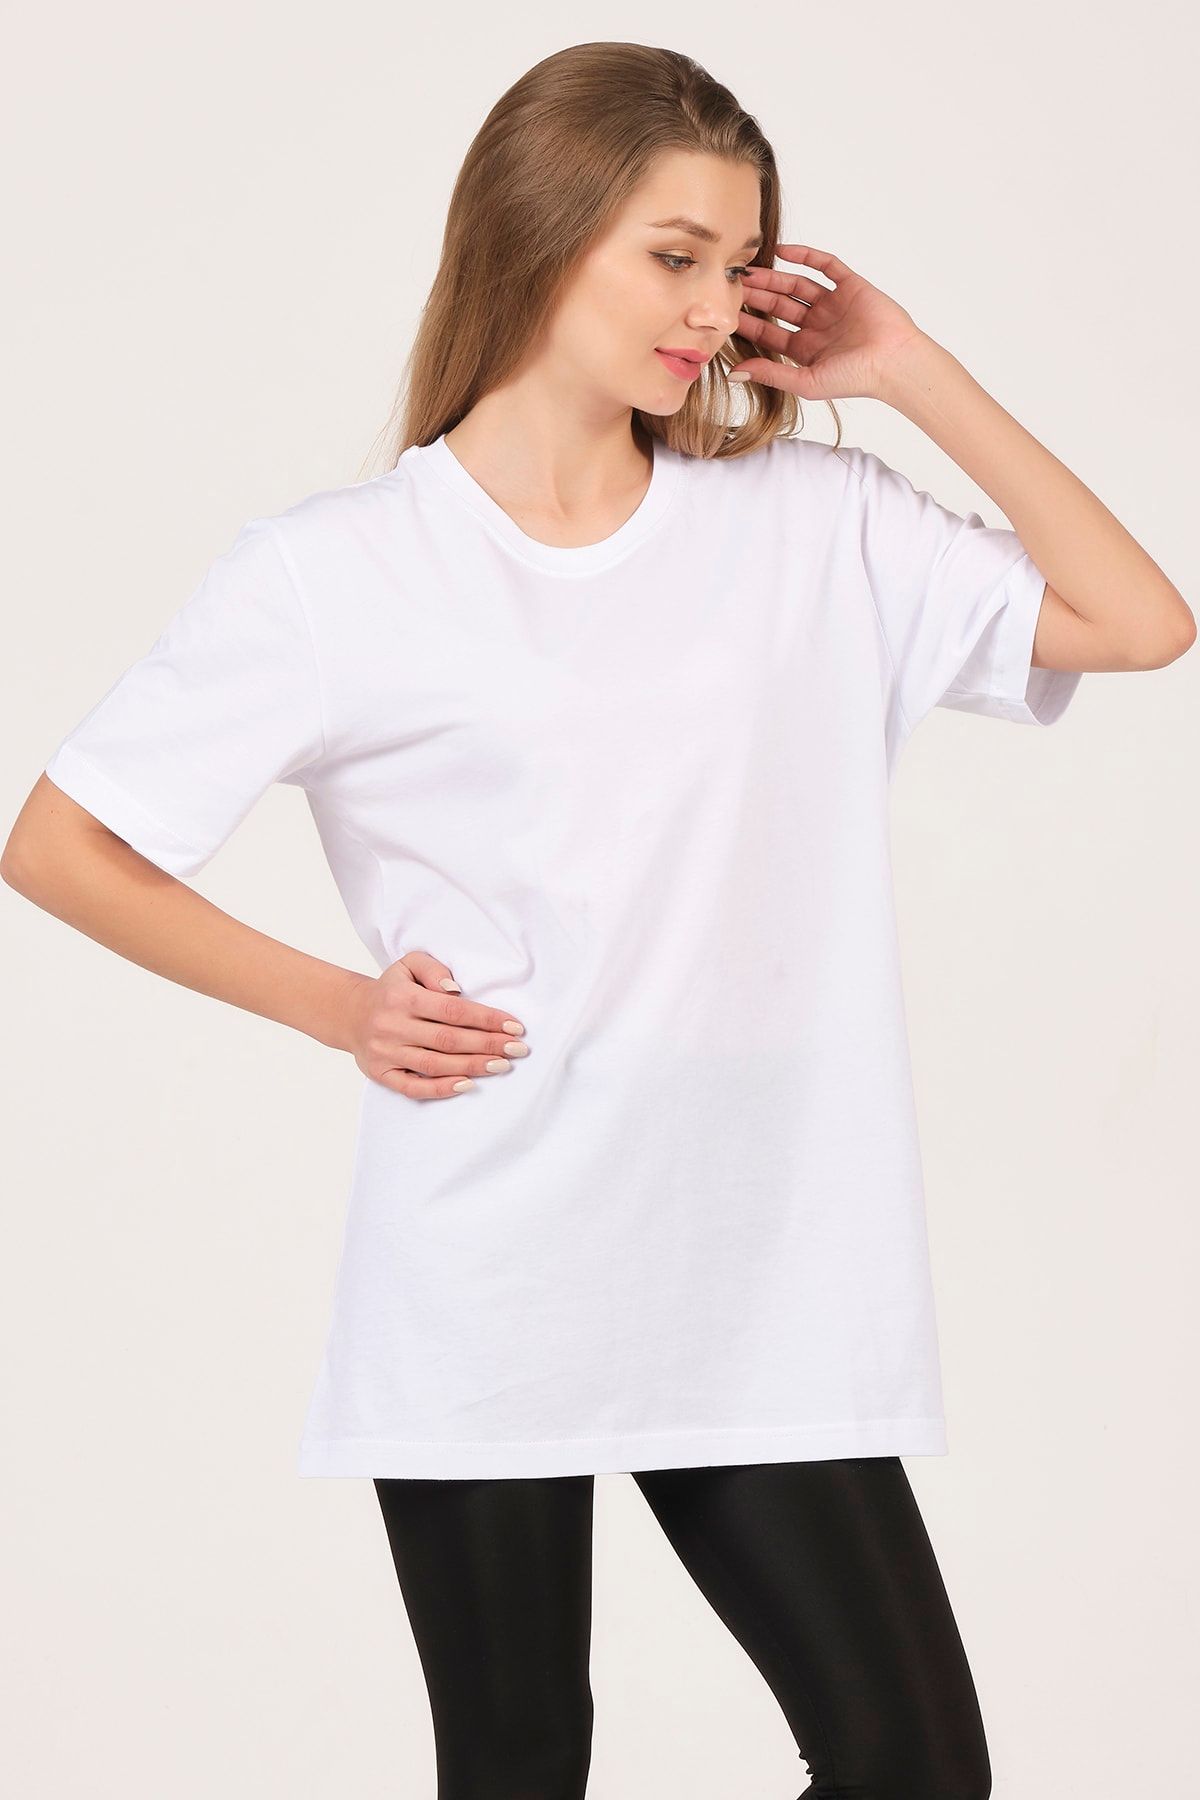 citadium Kadın Beyaz Bisiklet Yaka Kısa Kollu Basic T-shirt %100 Pamuk